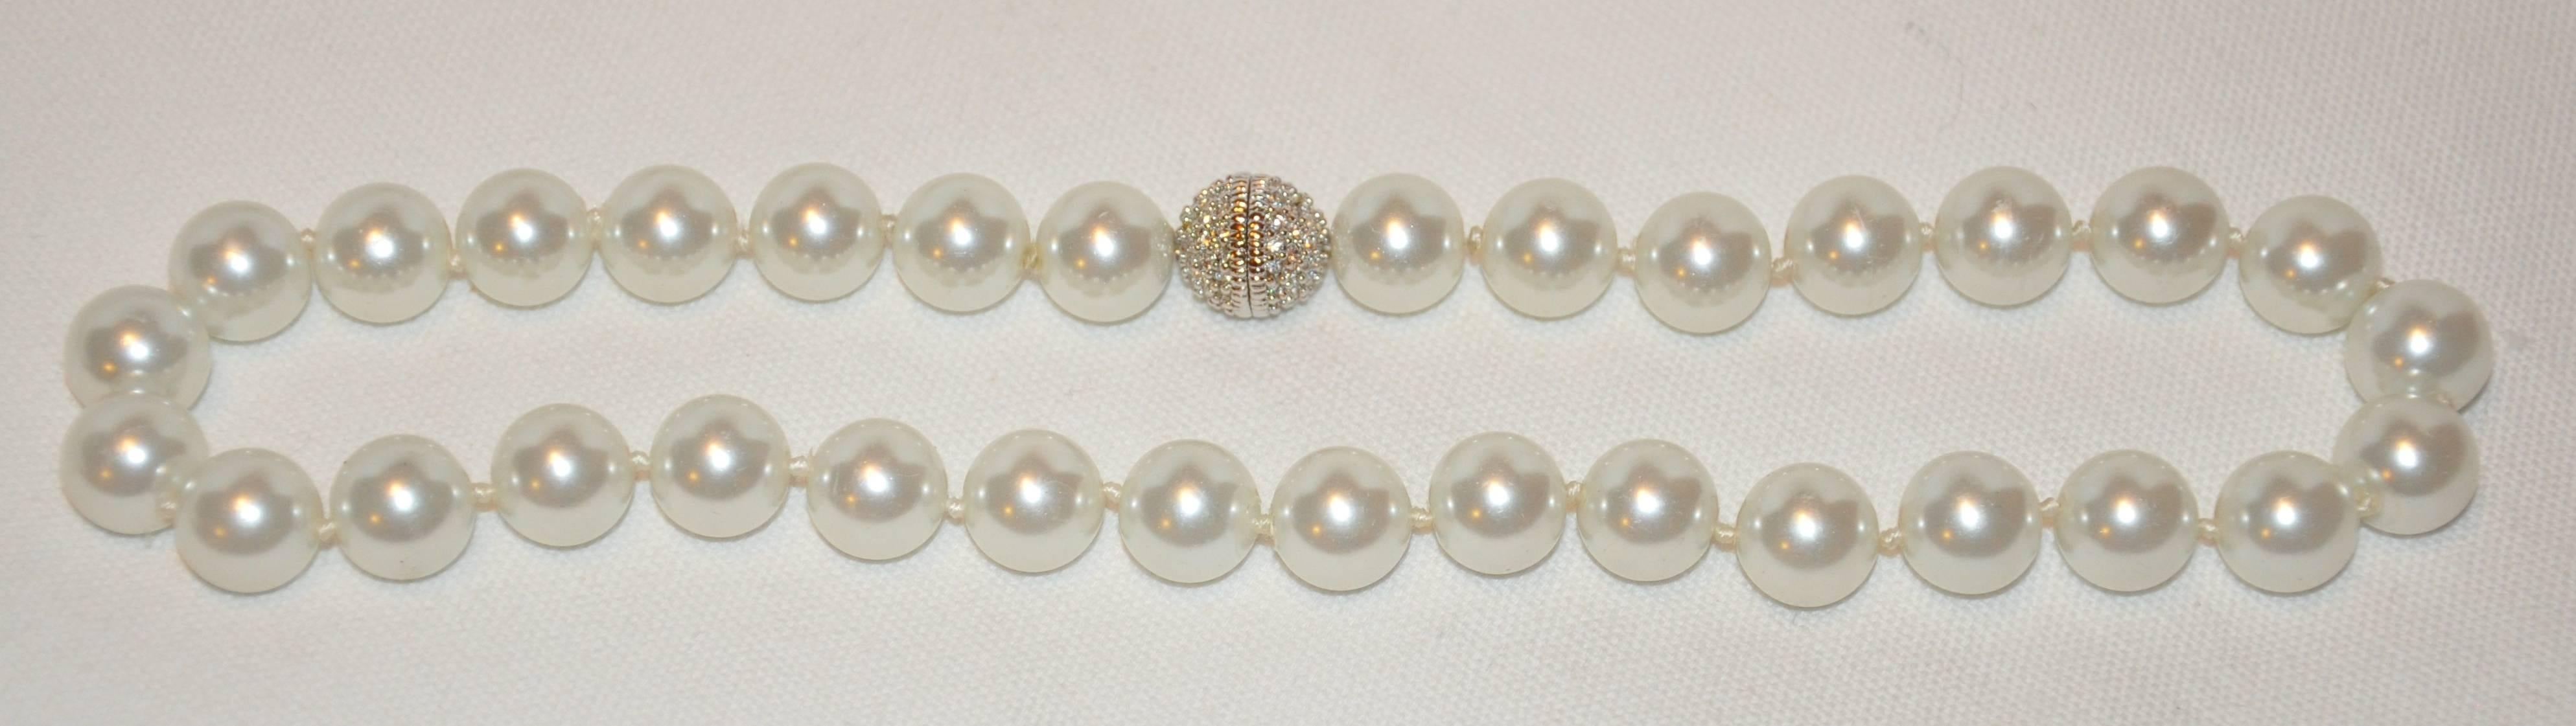 Néo-baroque Grand collier d'inspiration Chanel en fausses perles accentué de strass en vente